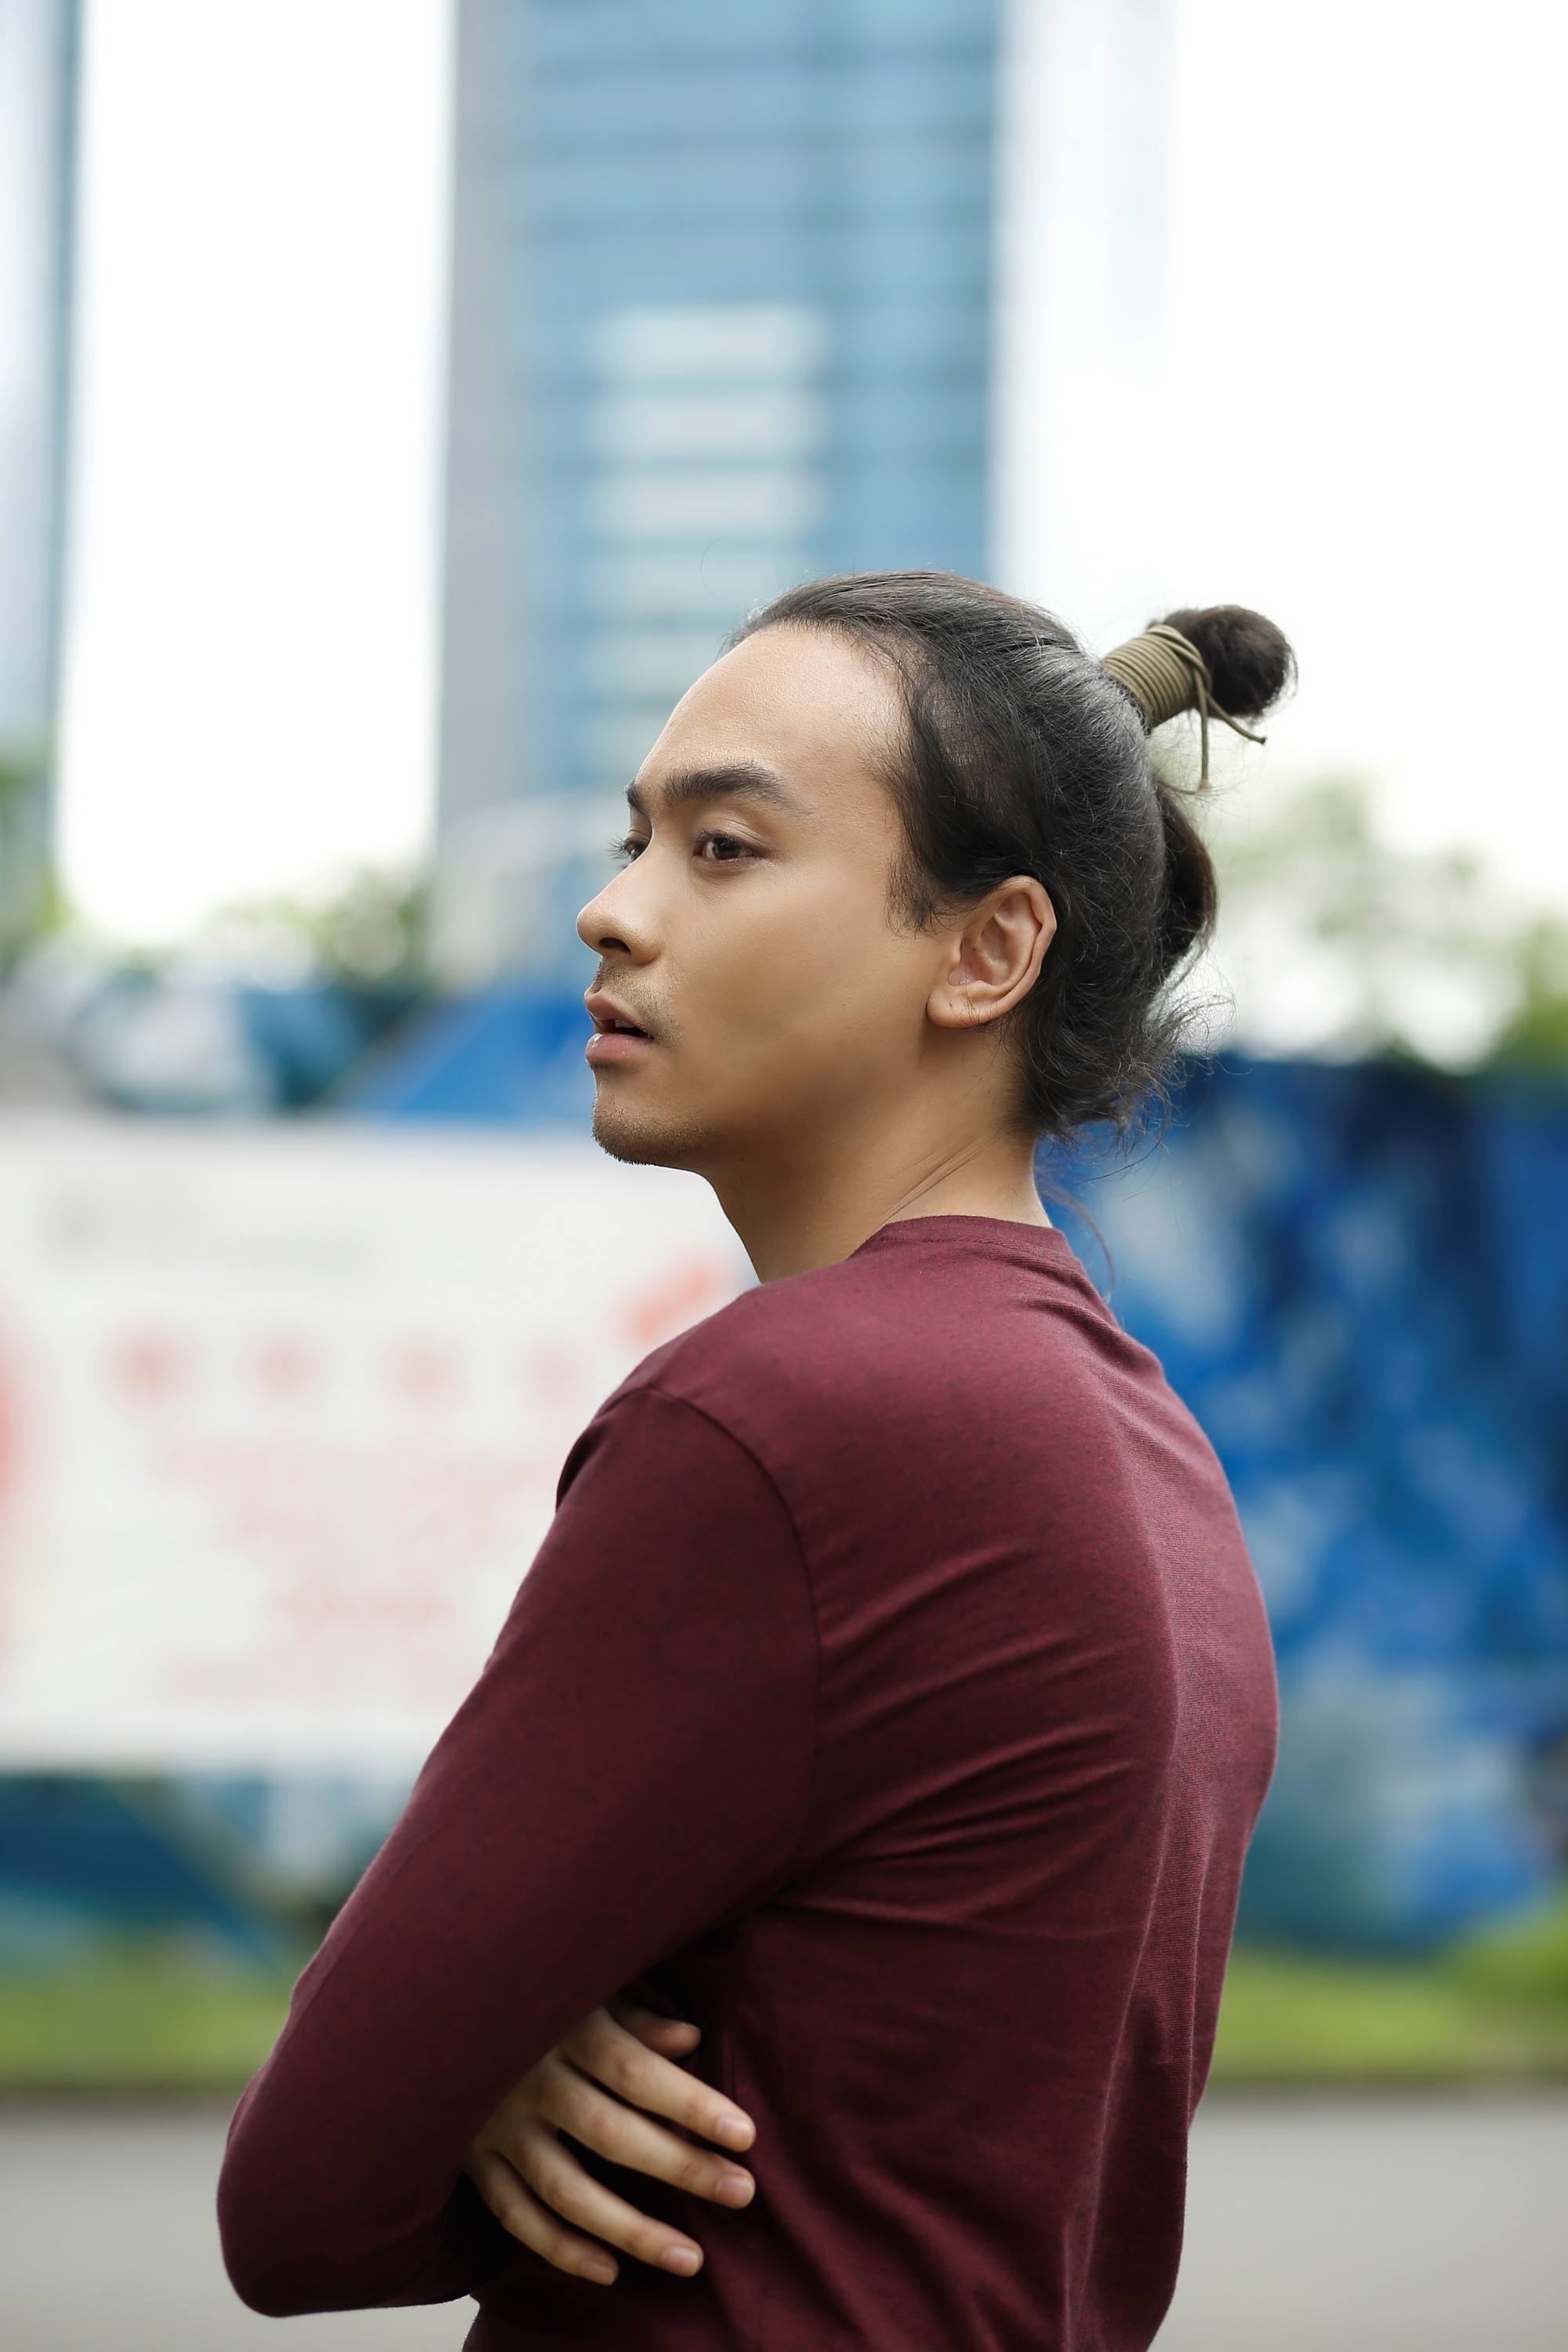 Messy hair bun: Asian man with a samurai bun wearing a maroon long-sleeved shirt